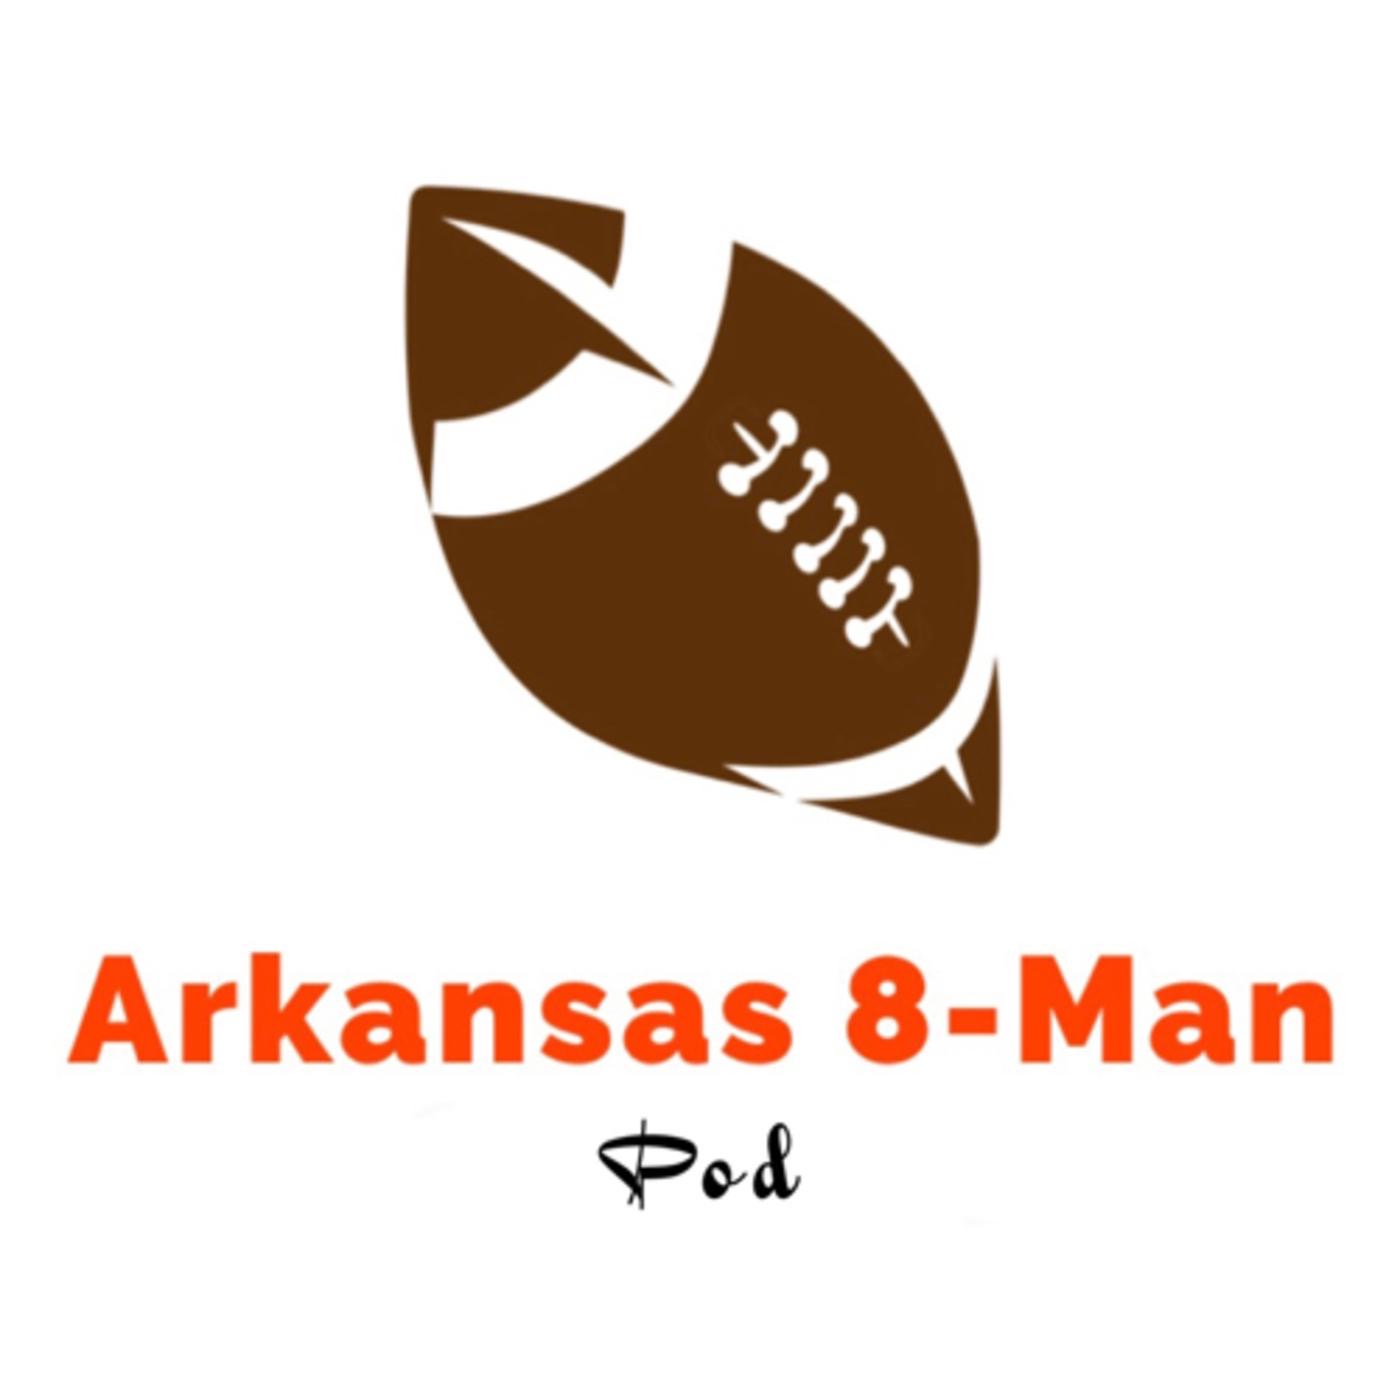 Arkansas 8-Man Pod Episode 10